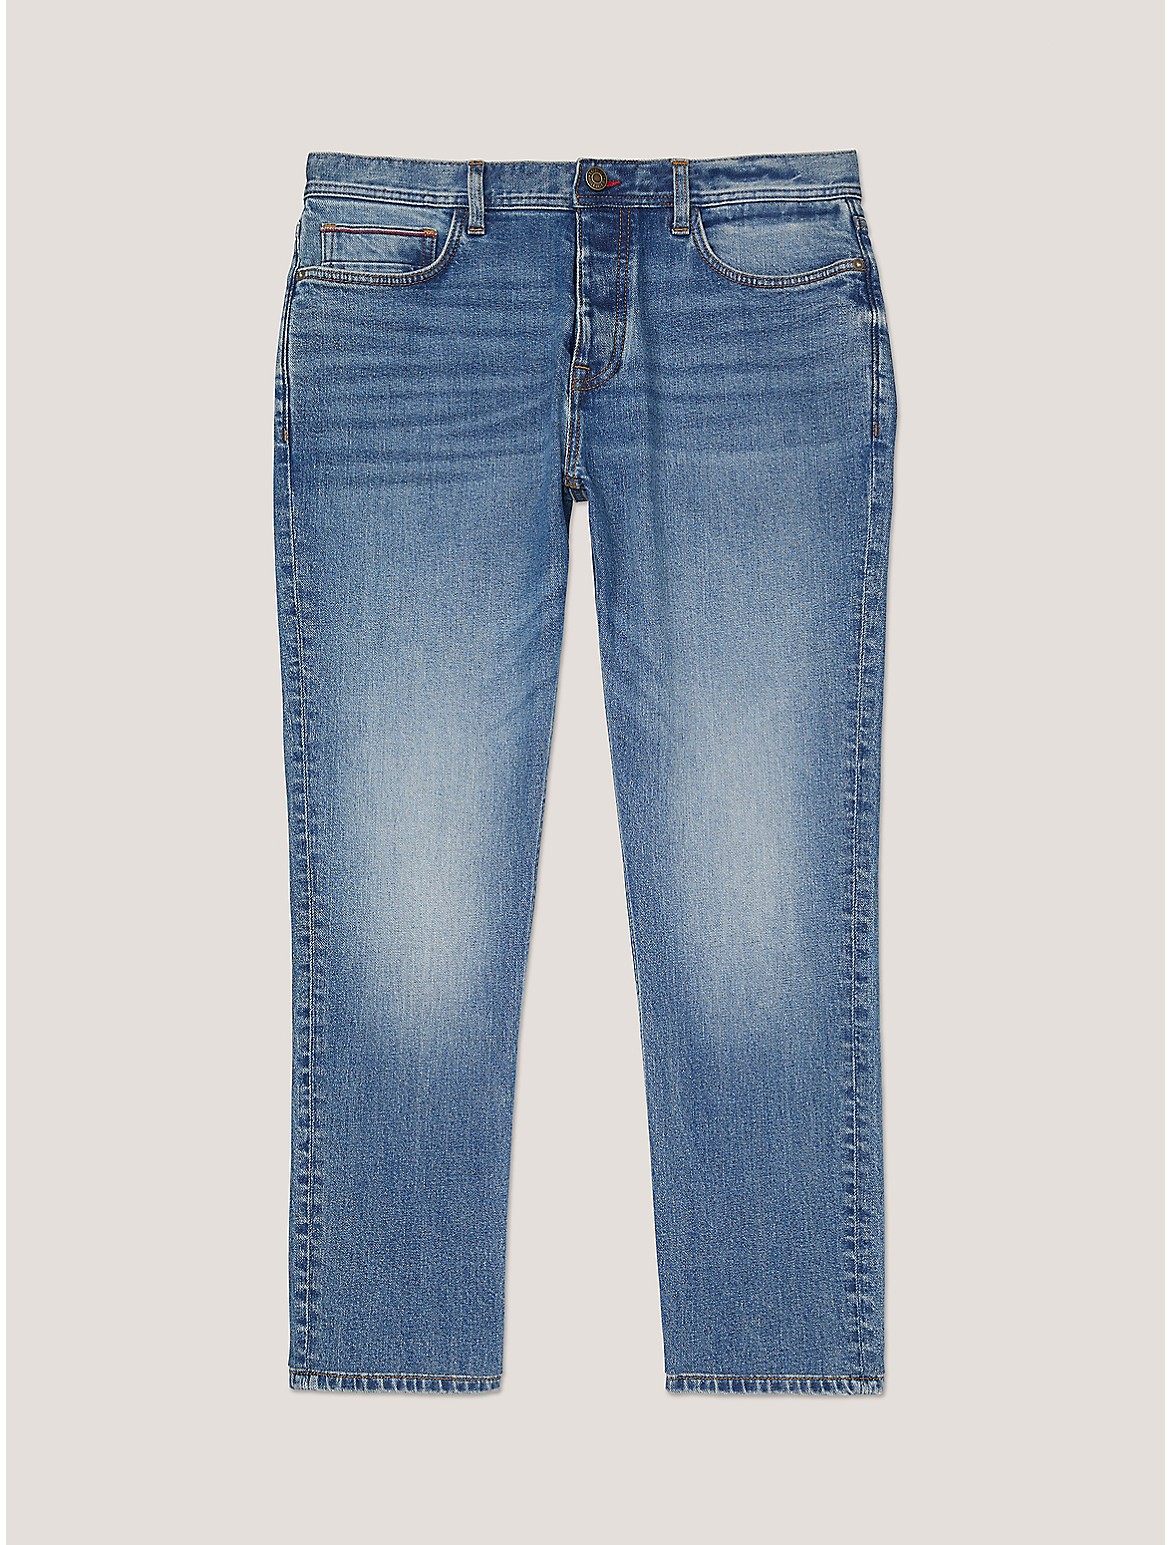 Tommy Hilfiger Men's Straight Fit Medium Wash Jean